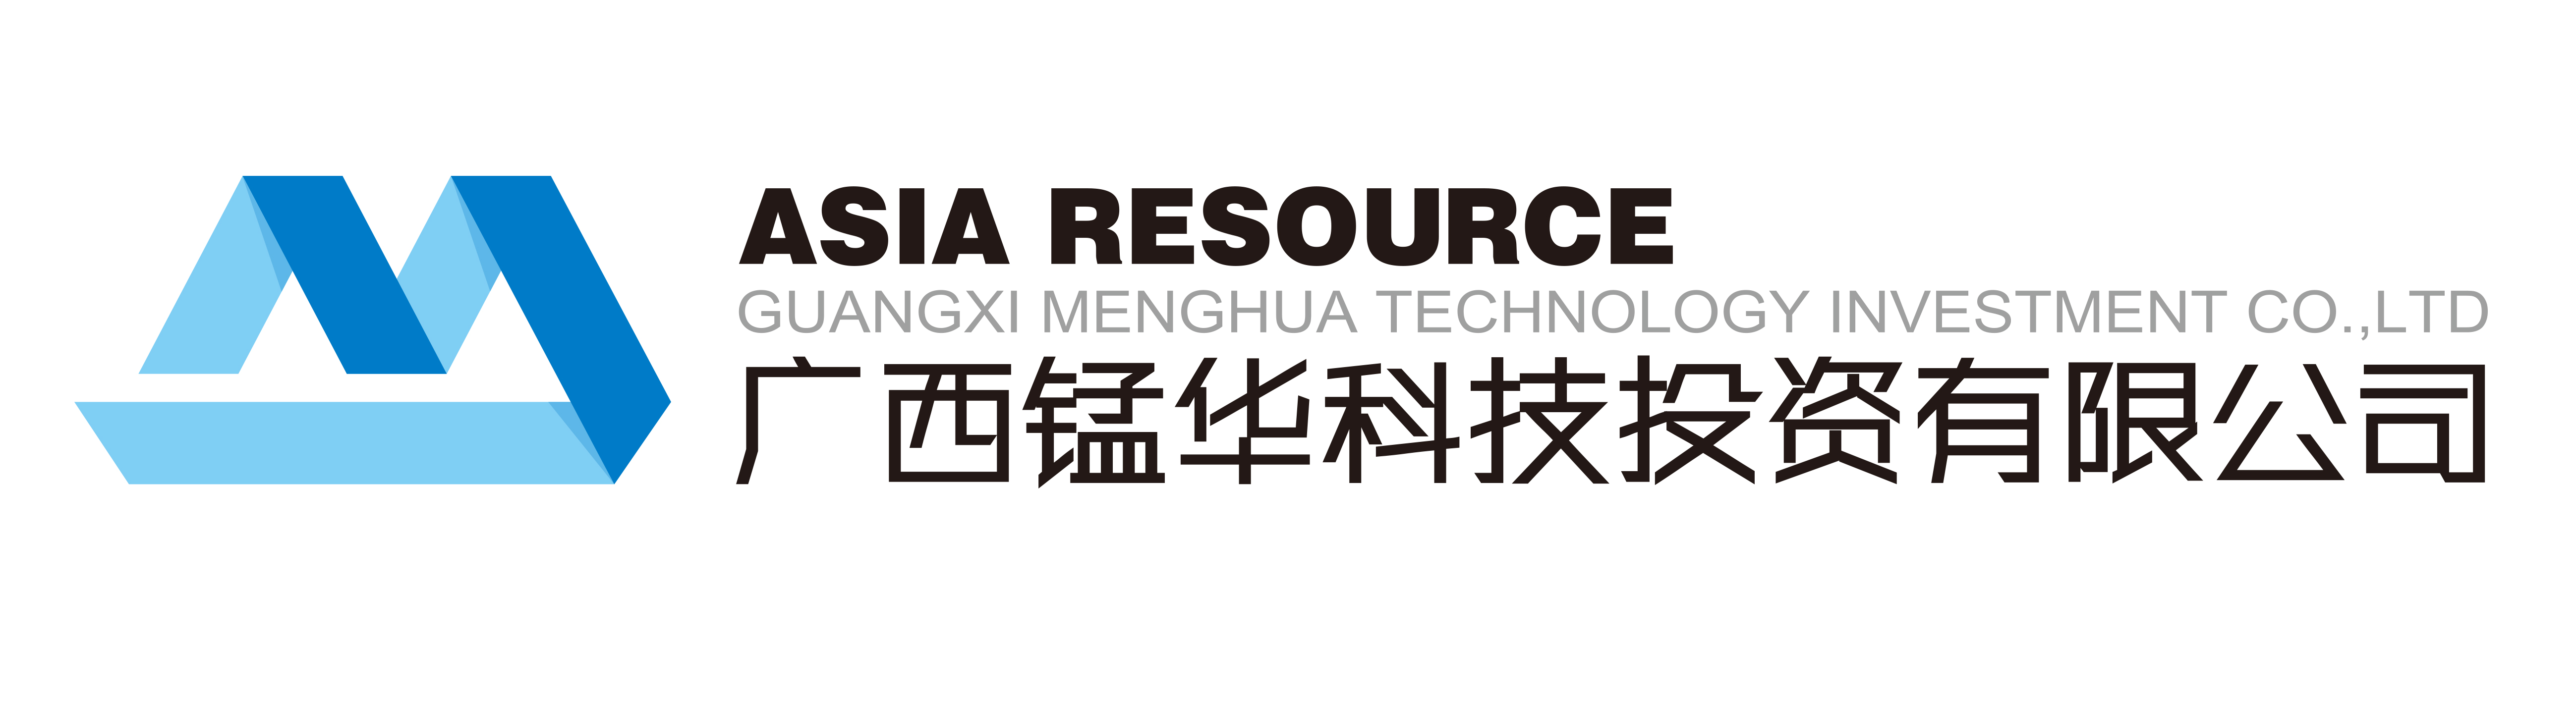 Guangxi Menghua Technology Investment Co., Ltd.